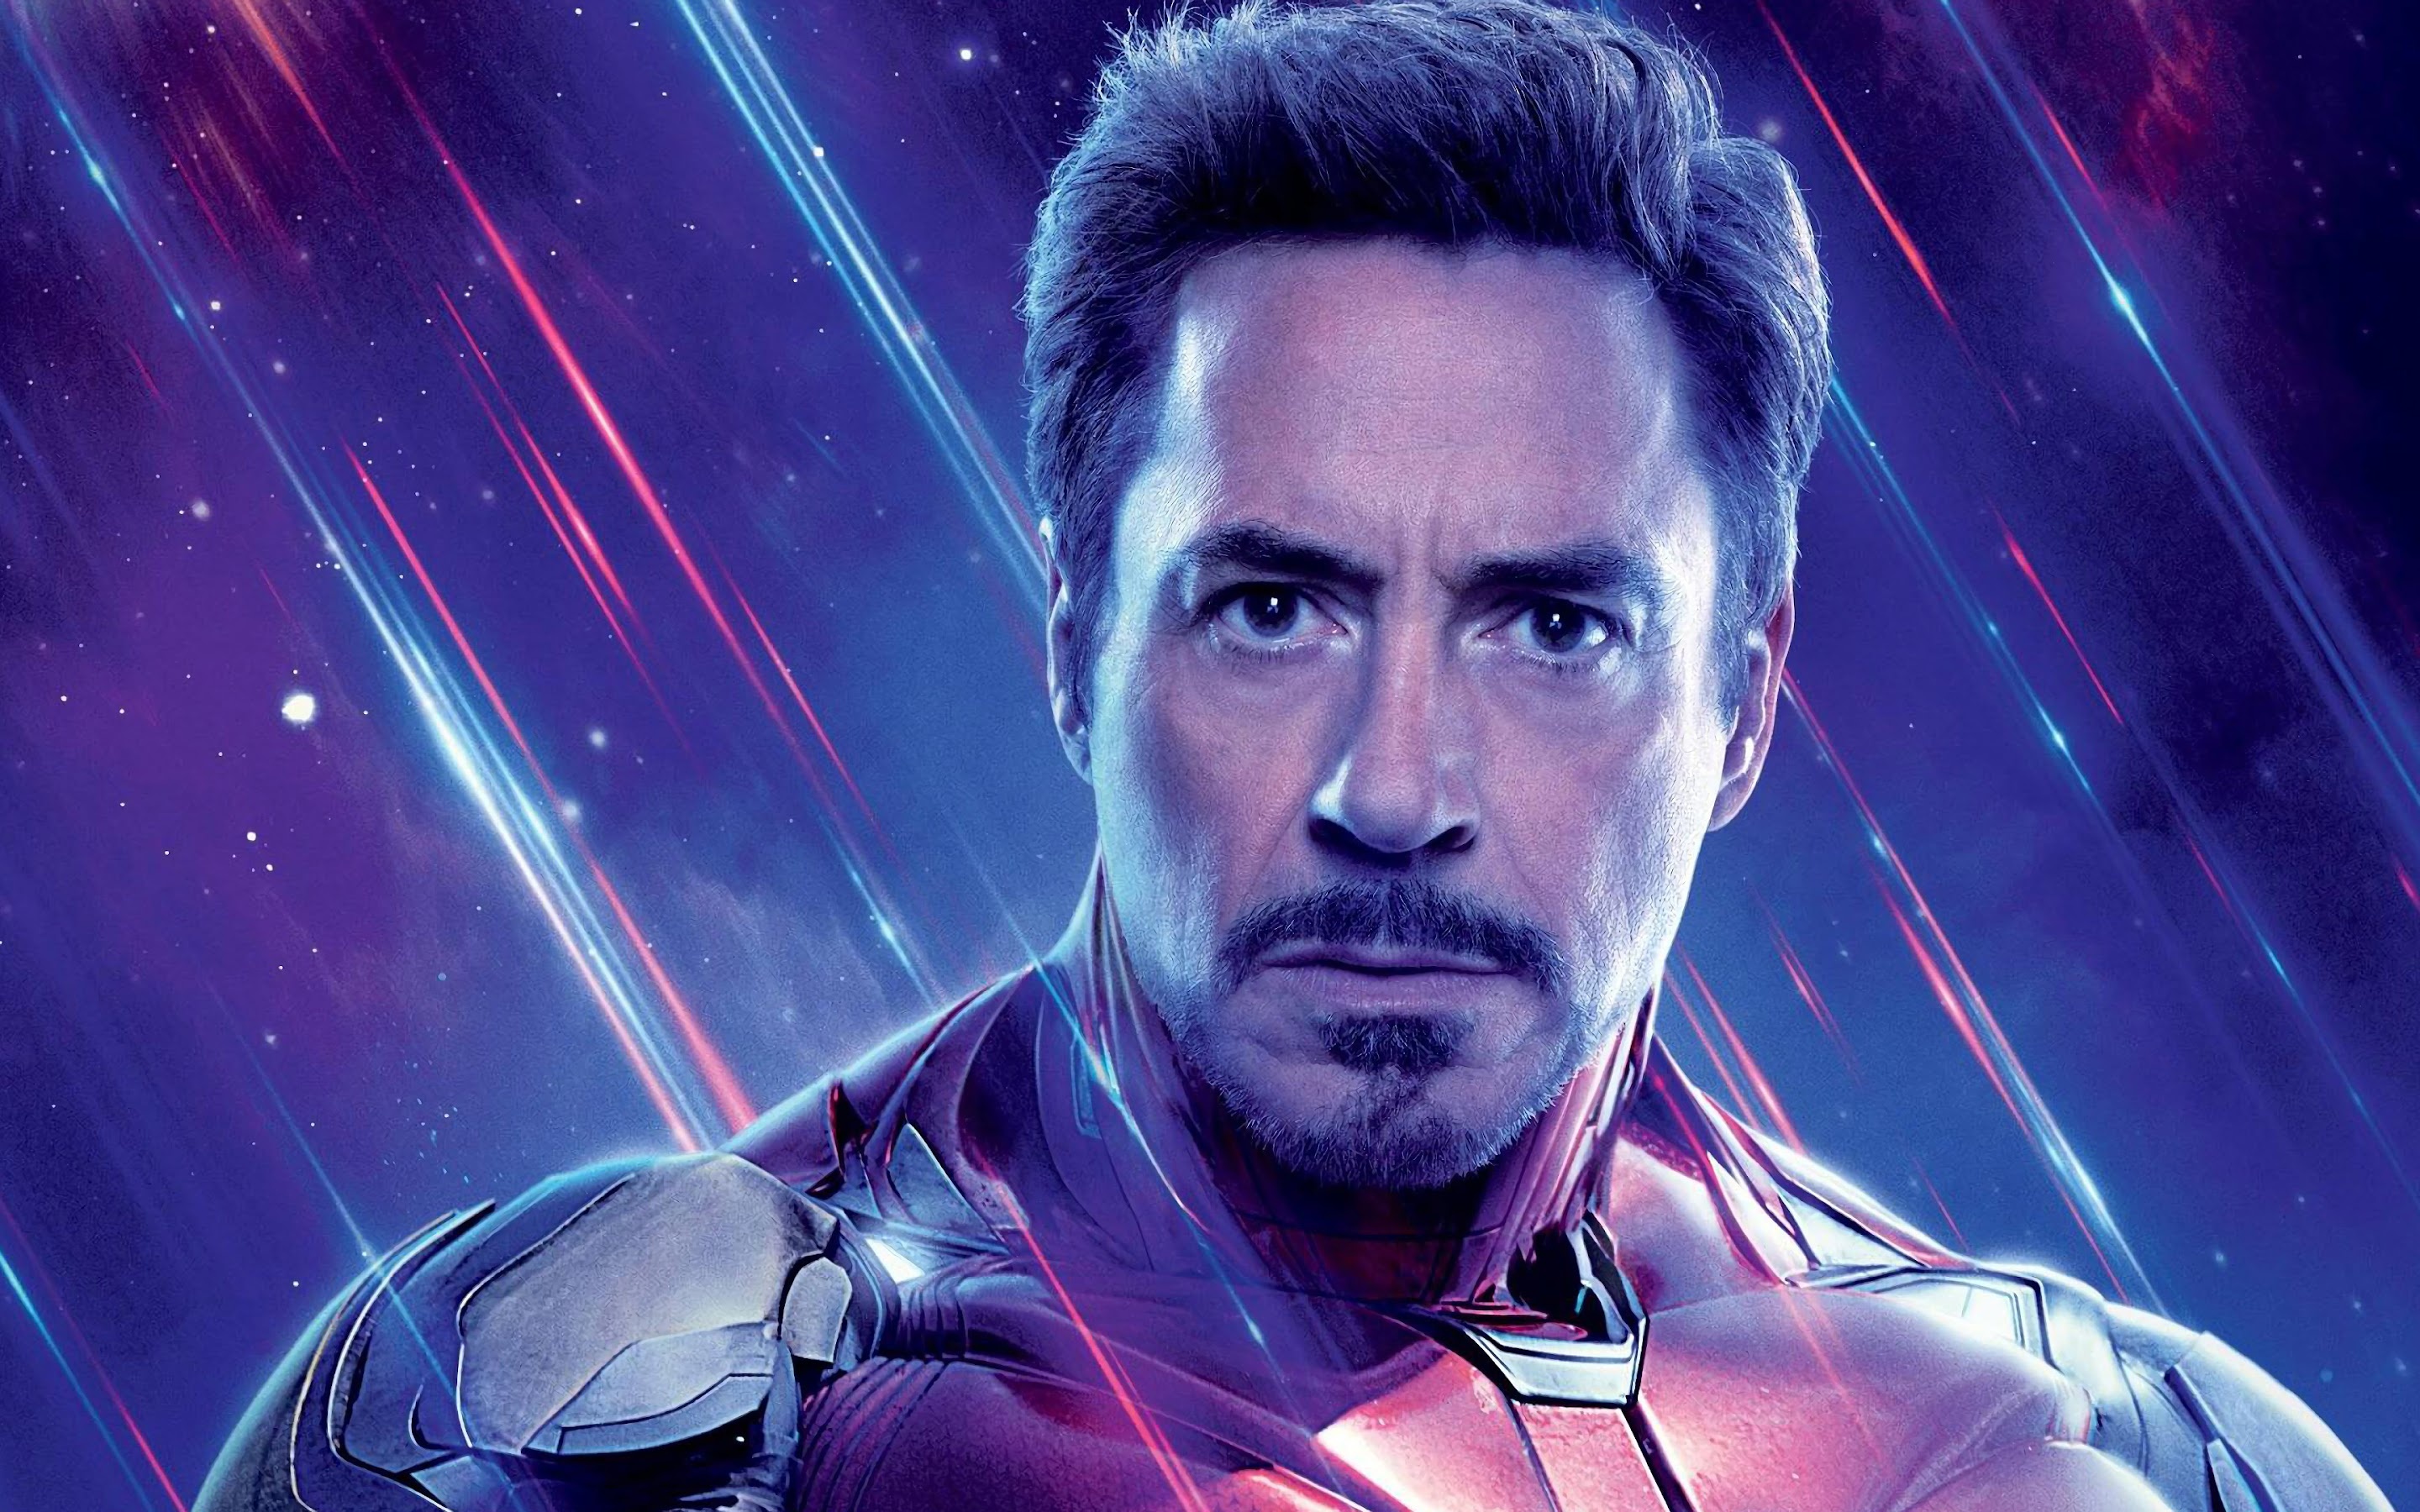 Robert Downey Jr.: Known for starring as Iron Man, Avengers: Endgame. 2880x1800 HD Wallpaper.